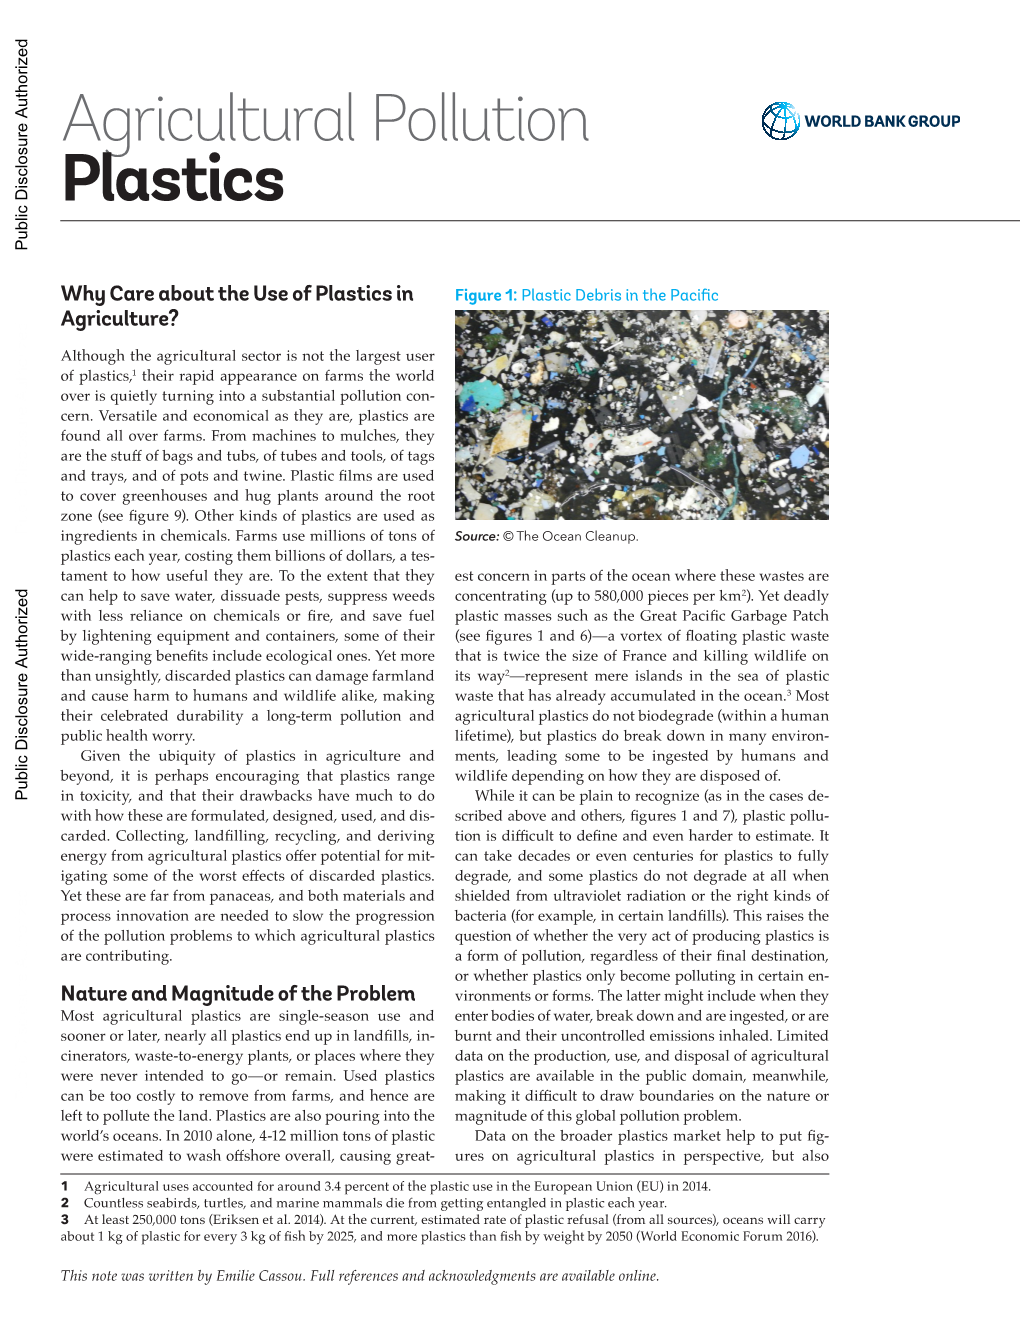 Agricultural Pollution Plastics Public Disclosure Authorized